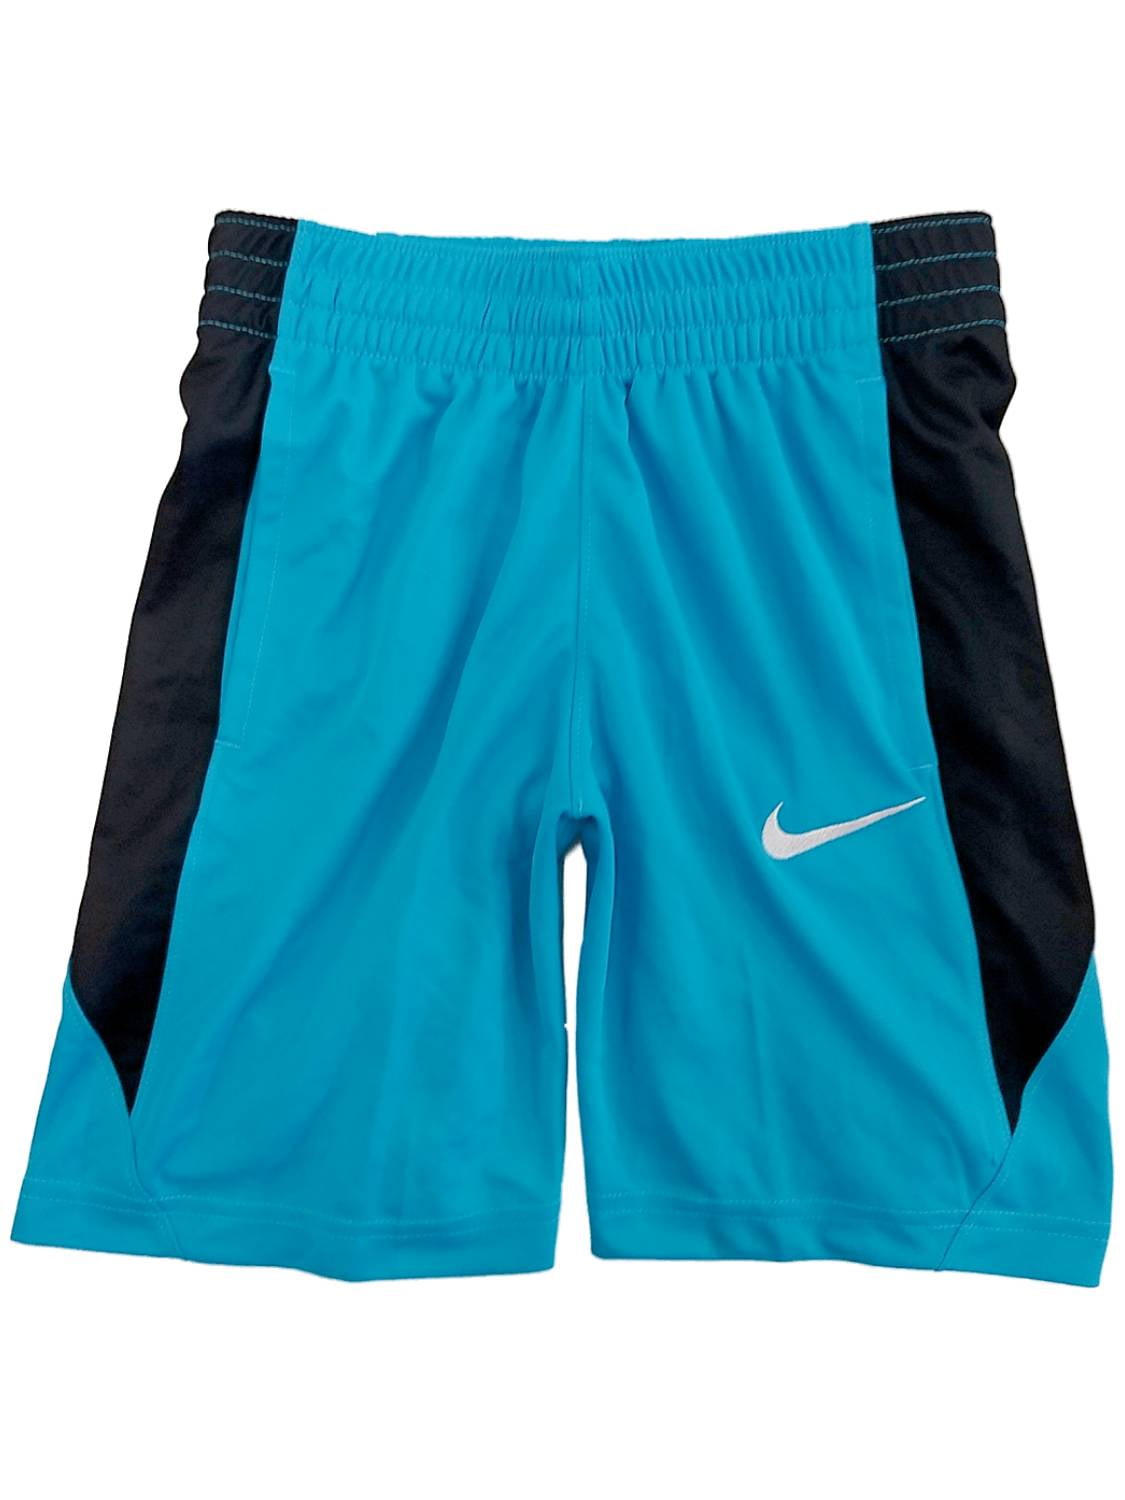 Nike Dry Dri-Fit Boys Blue & Black Athletic Basketball Shorts Medium ...